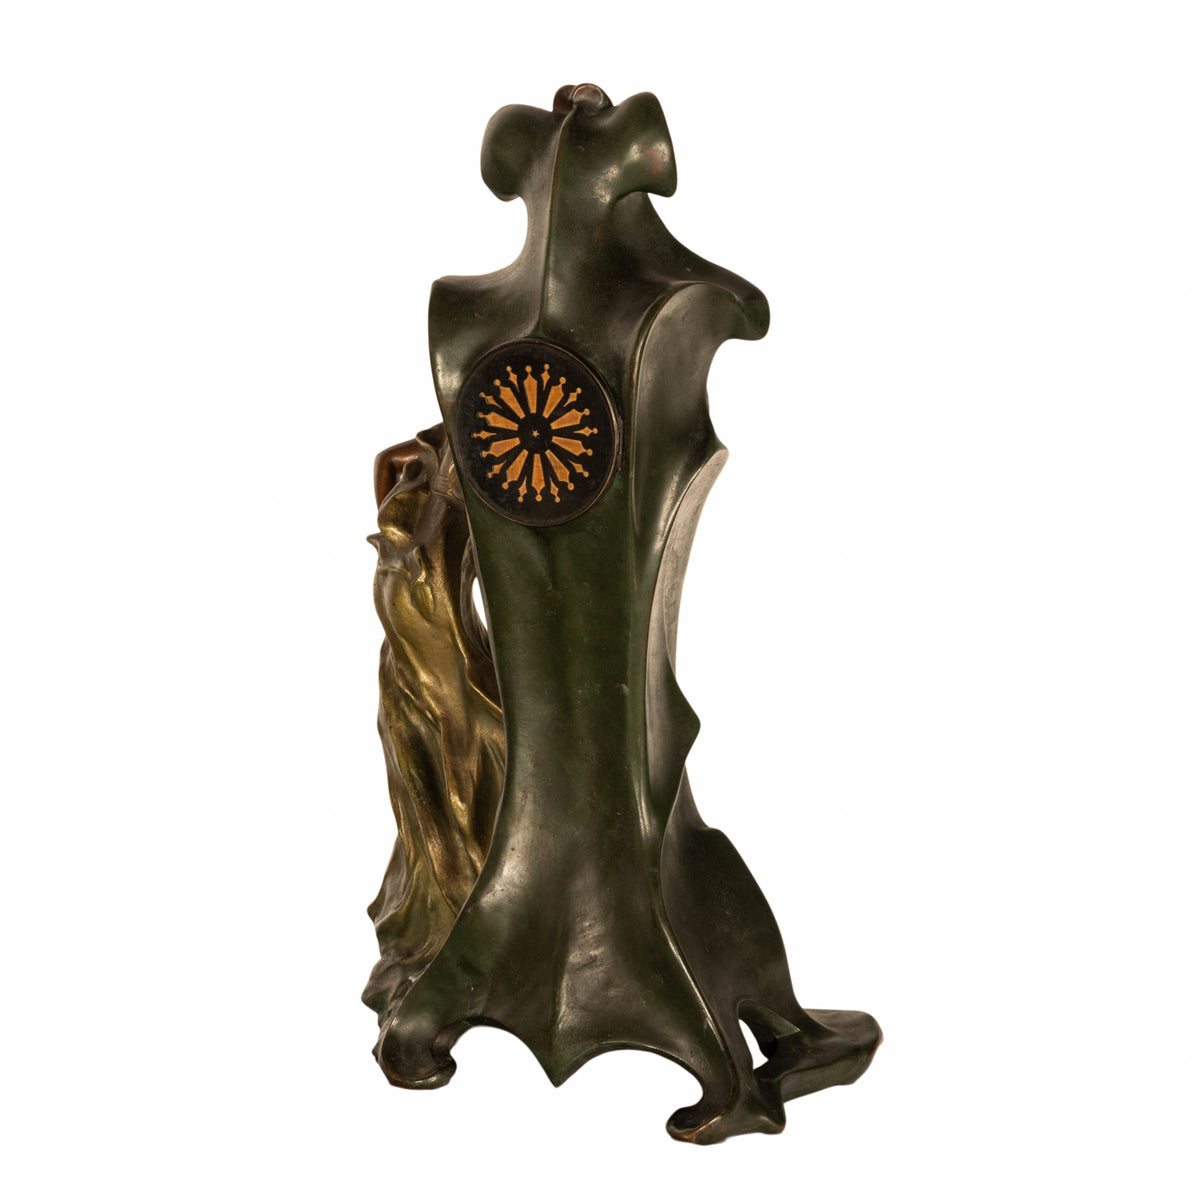 Antique French Art Nouveau Cold-Painted Bronze Figural Statue 8 Day Clock 1900